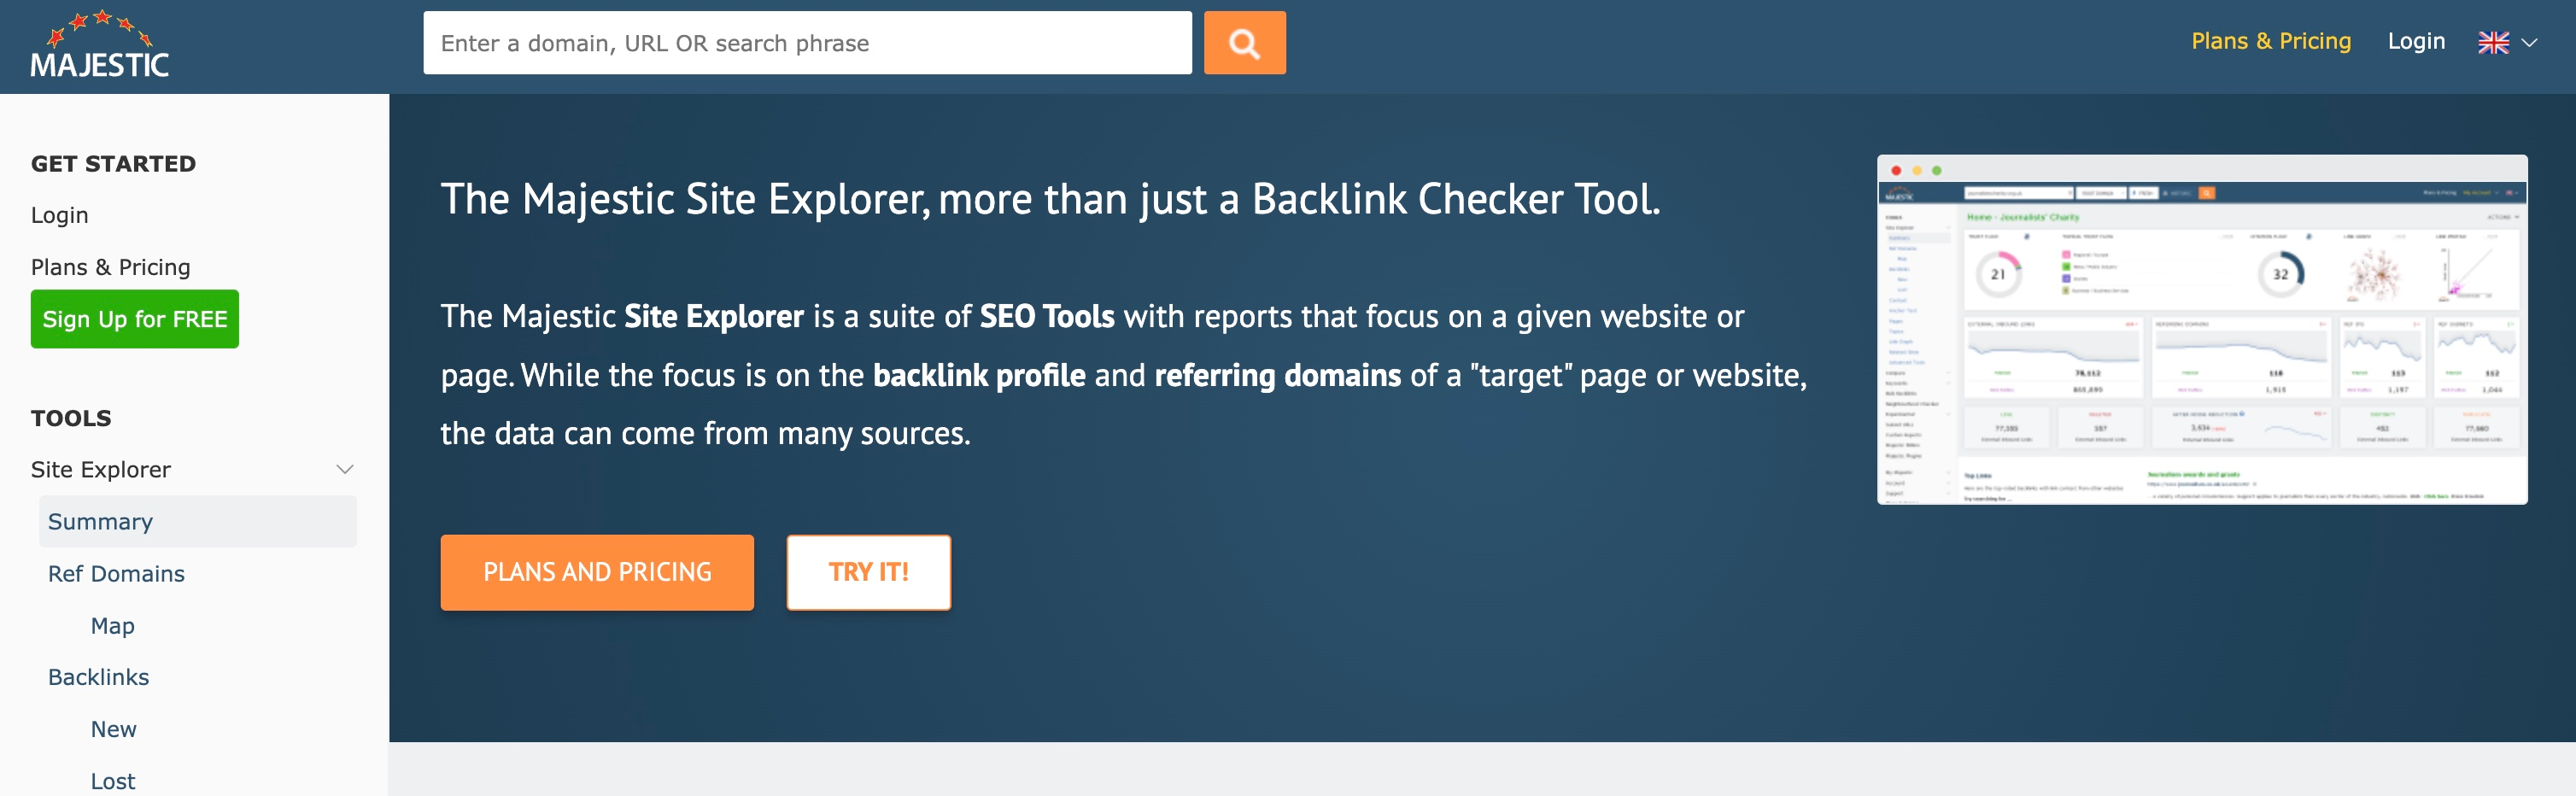 majestic seo domain authority / website authority checker tool